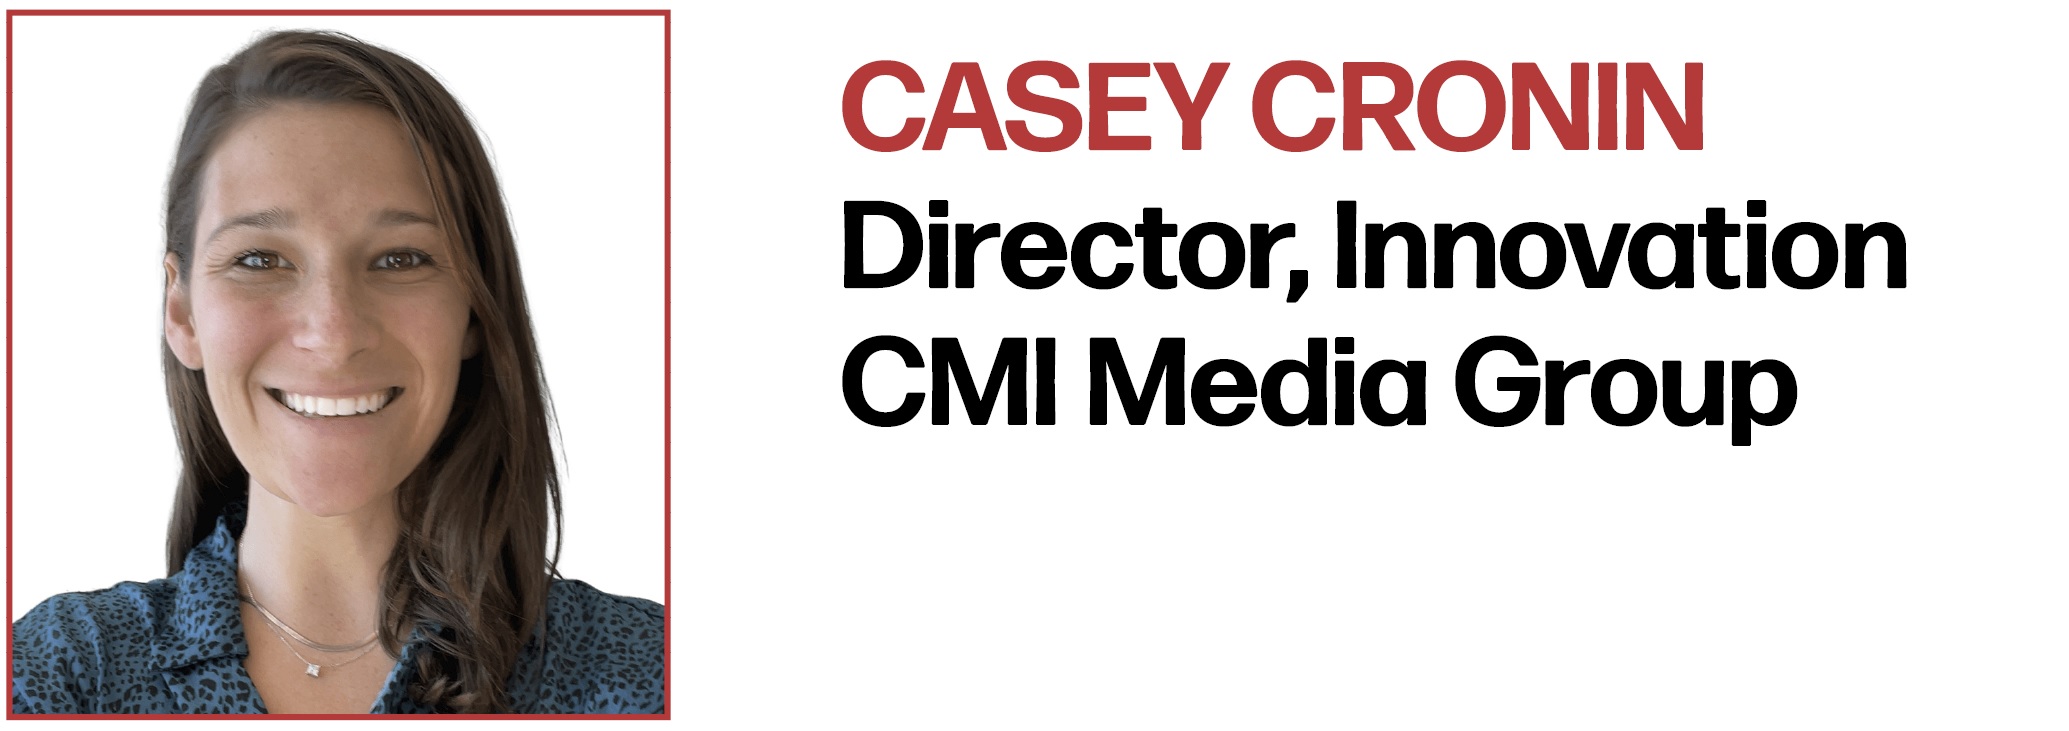 Casey Cronin Director, Innovation CMI Media Group